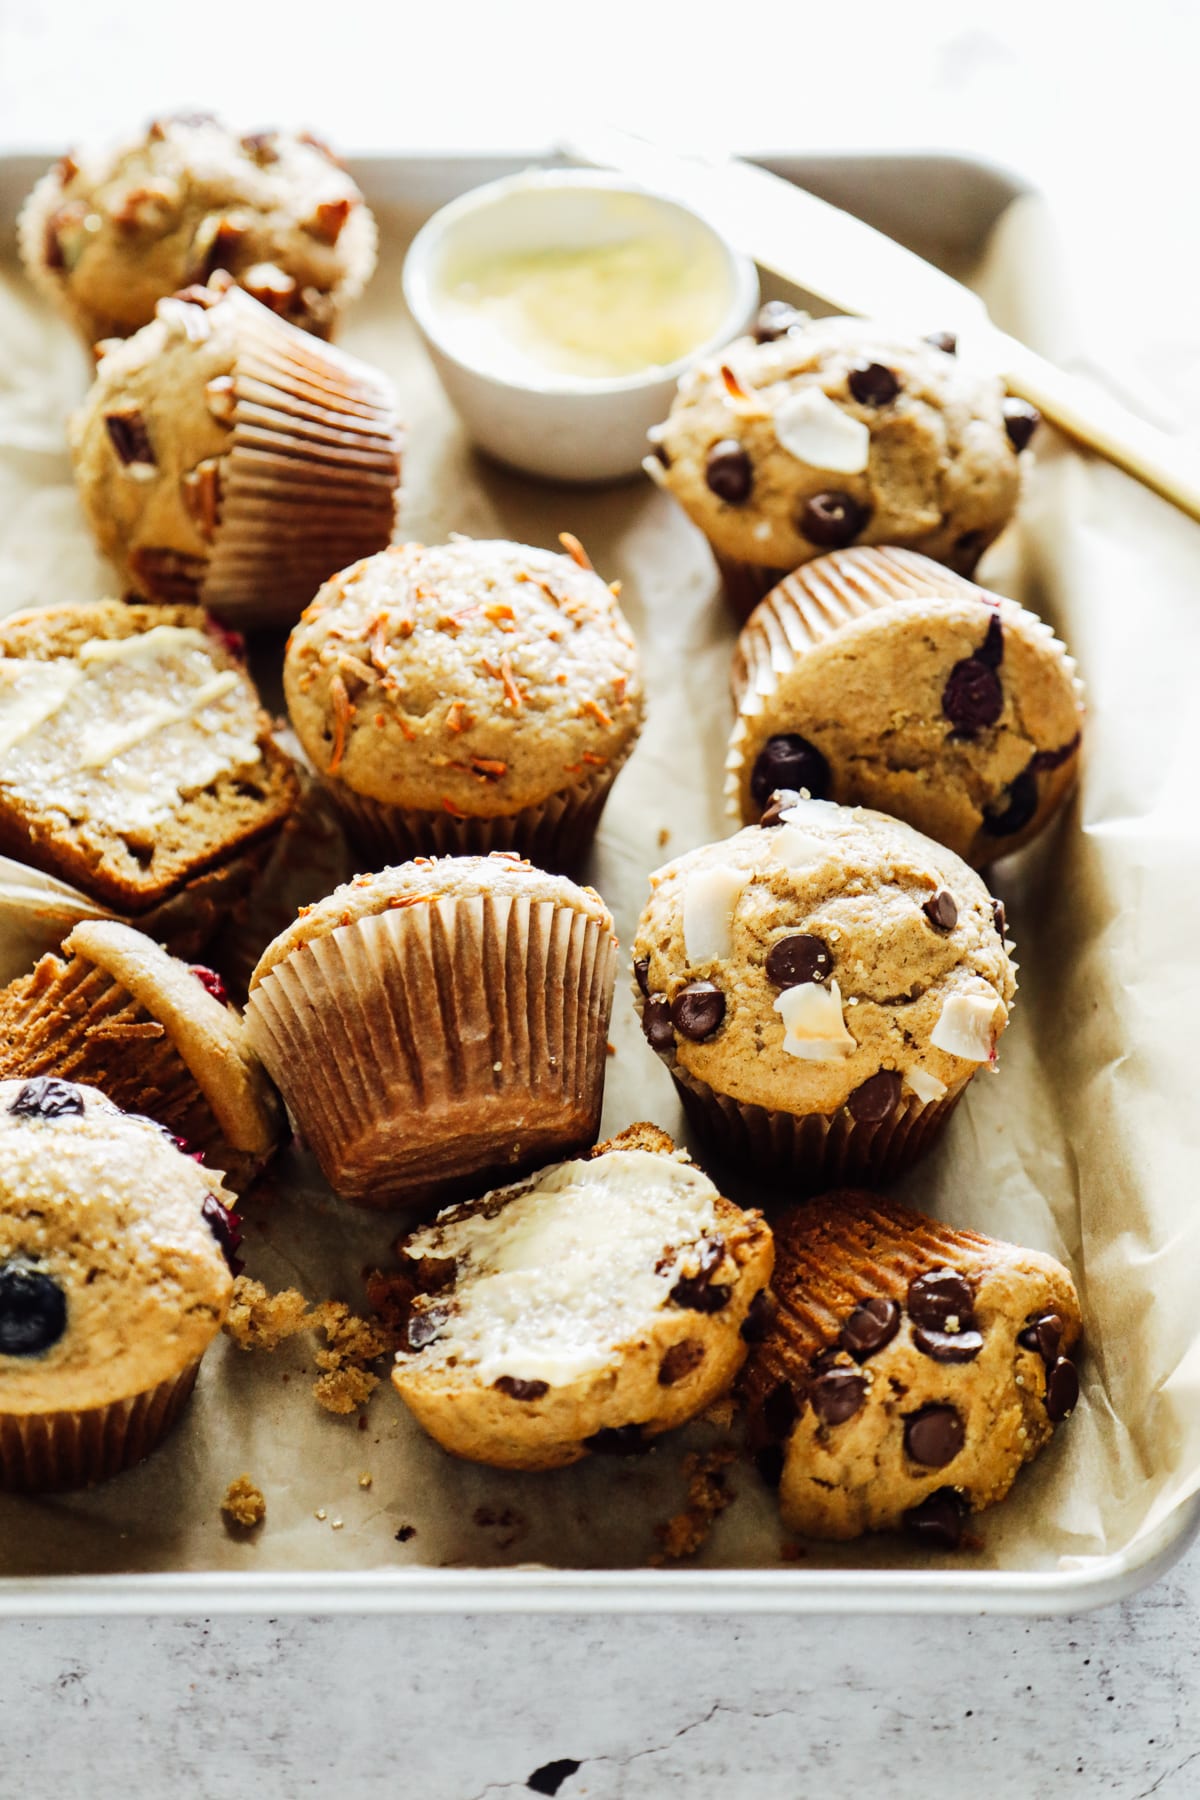 healthy kids school snack: homemade muffins